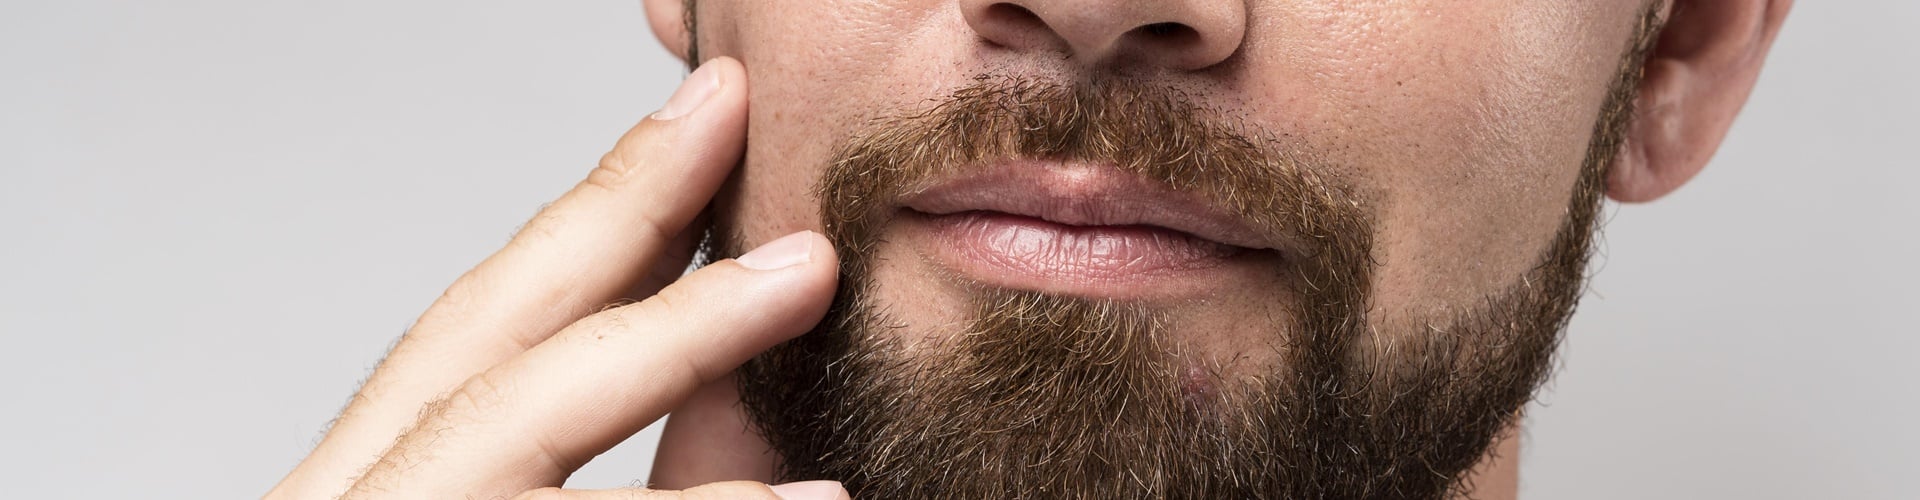 Implante de barba: saiba quanto custa e como funciona